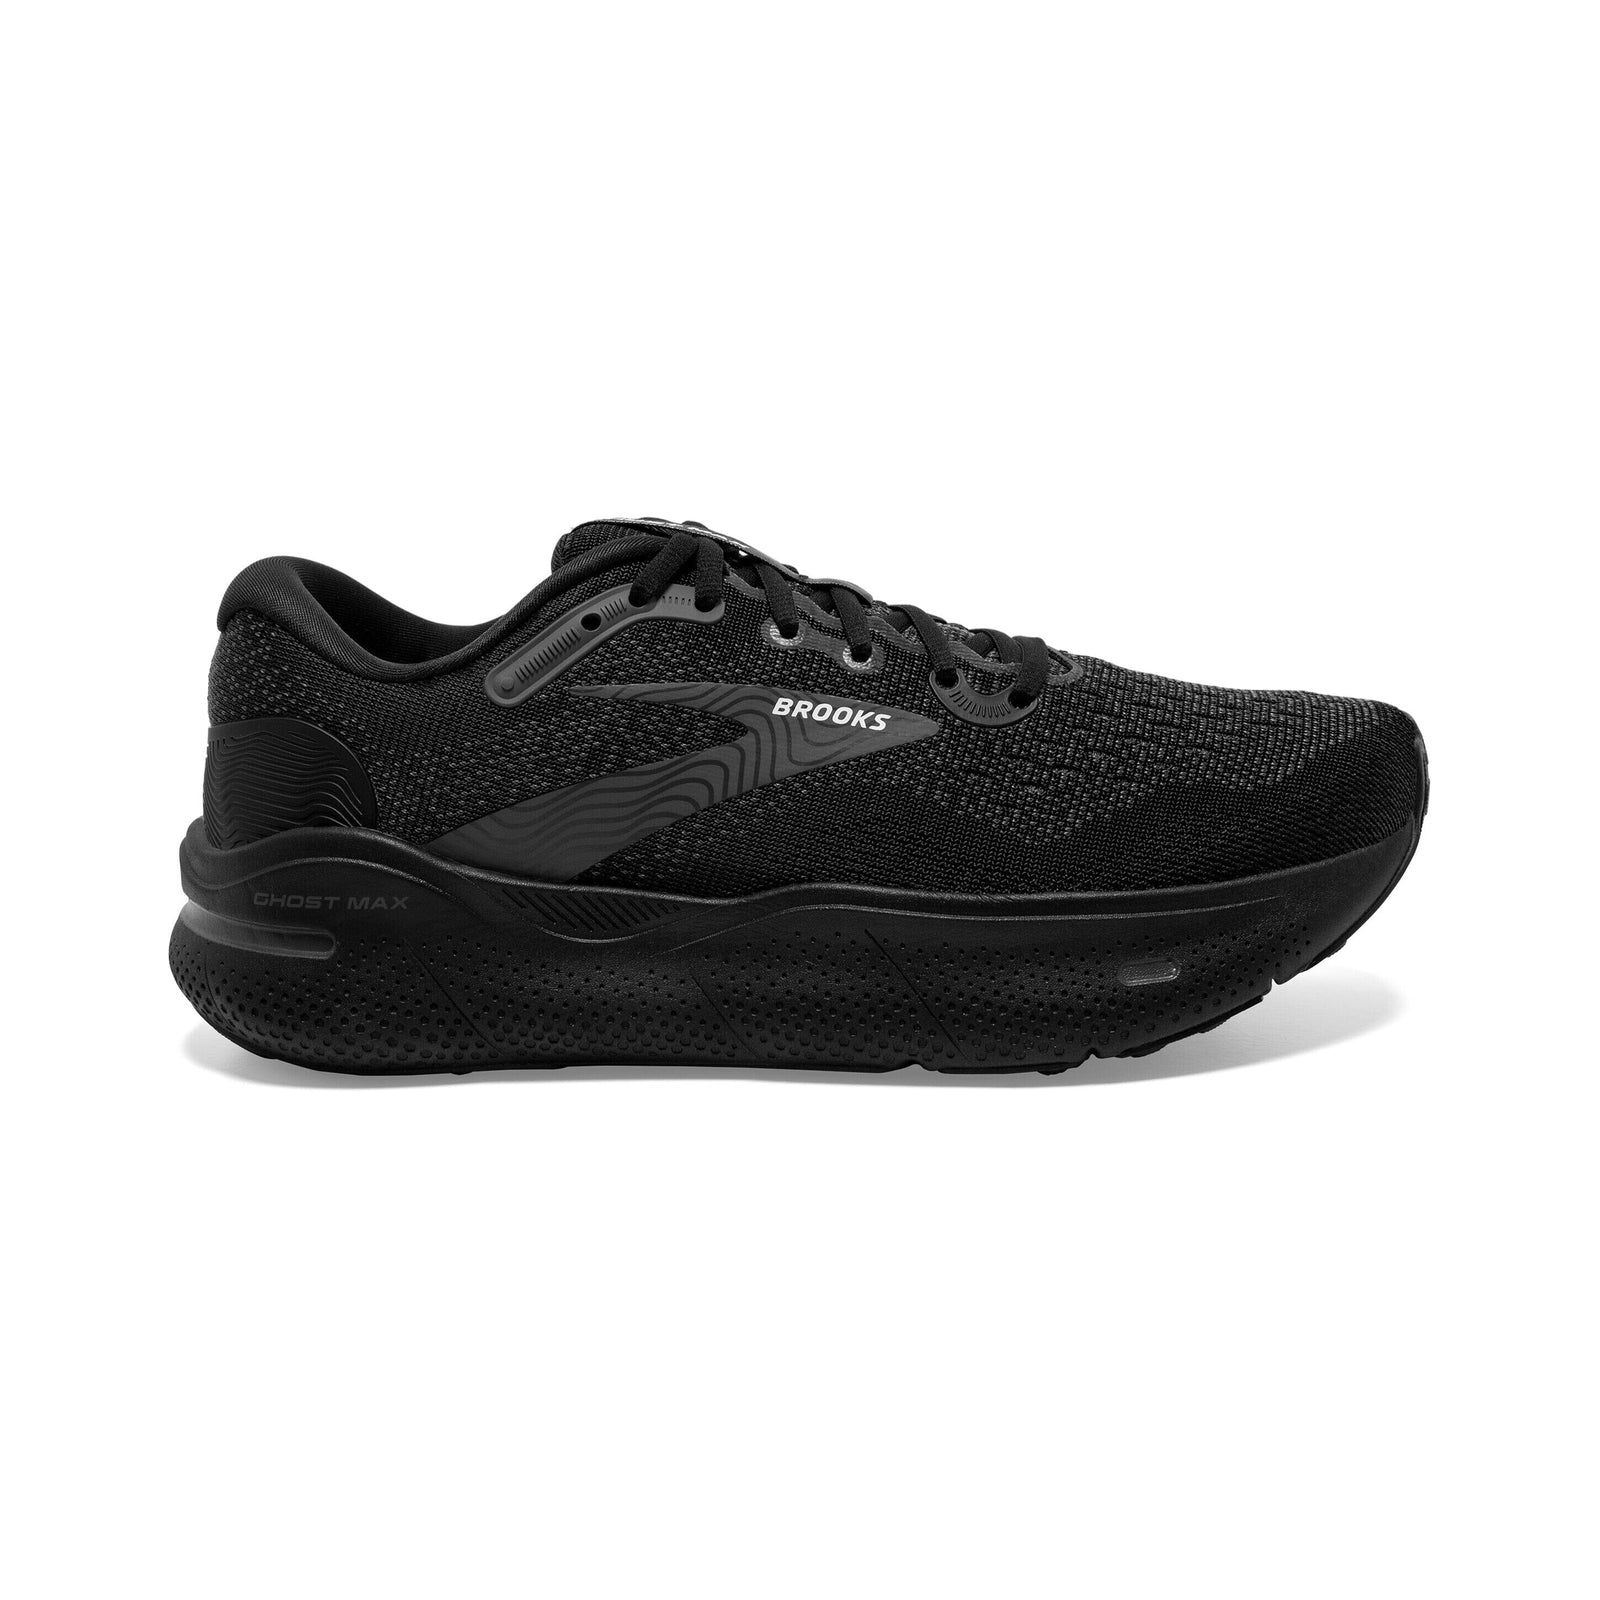 Brooks Men's Ghost Max Road Running Shoes Black/Black/Ebony US 8 Wide